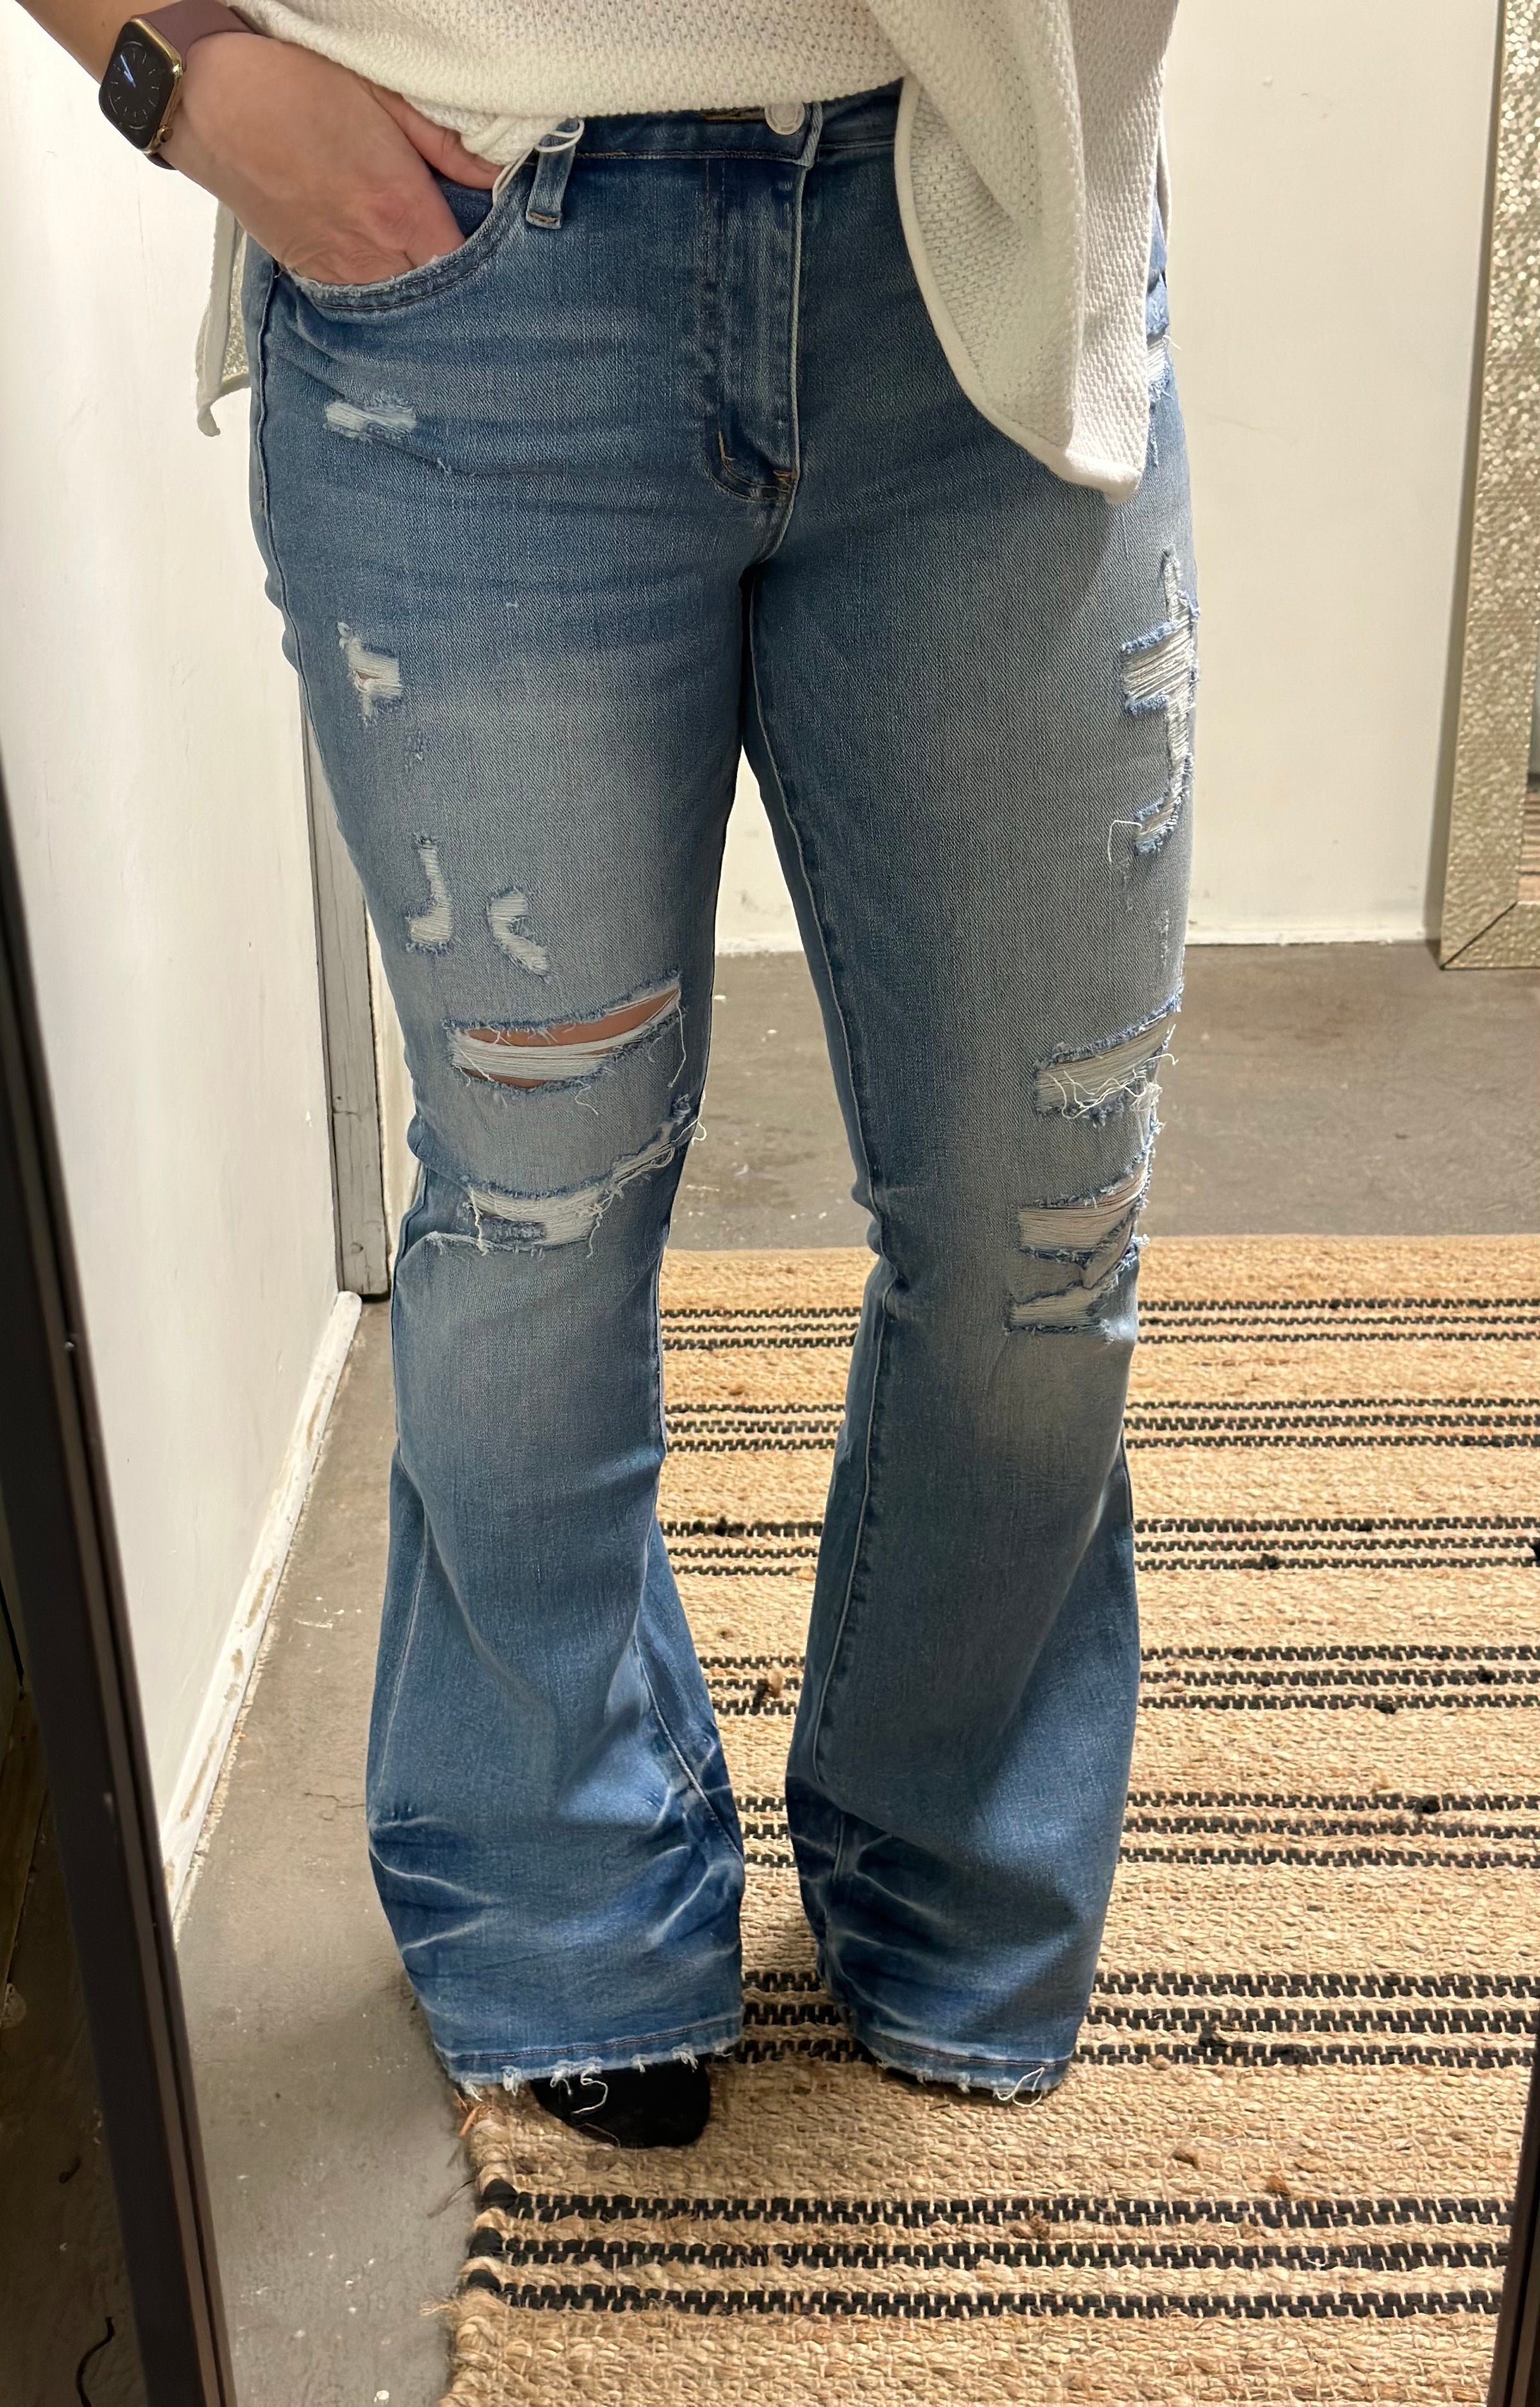 Vervet Alison mid-rise flare jeans